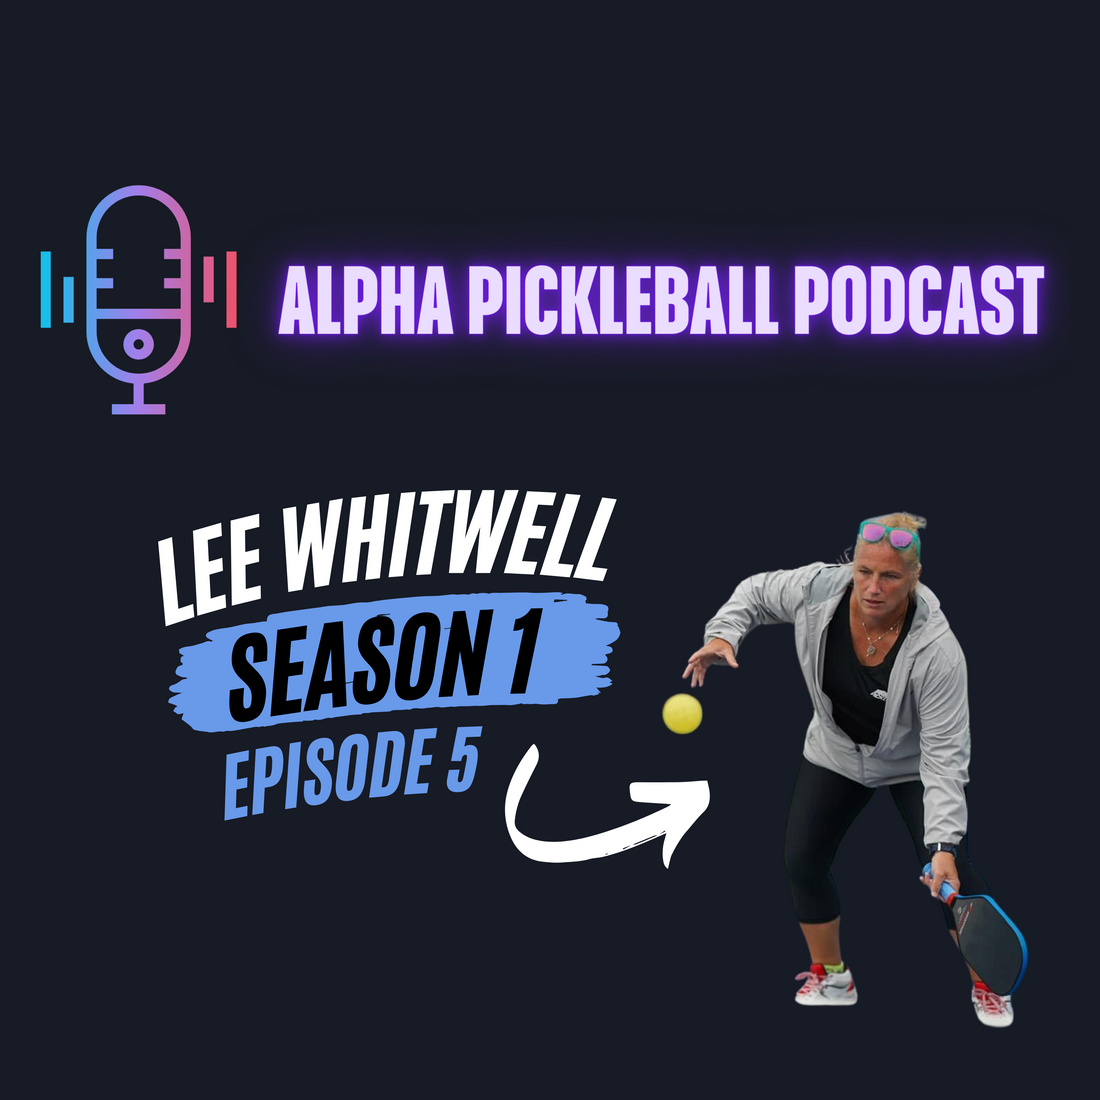 Alpha Pickleball Podcast Season 1 Episode 5 (Lee Whitwell Pro Pickleball Player)